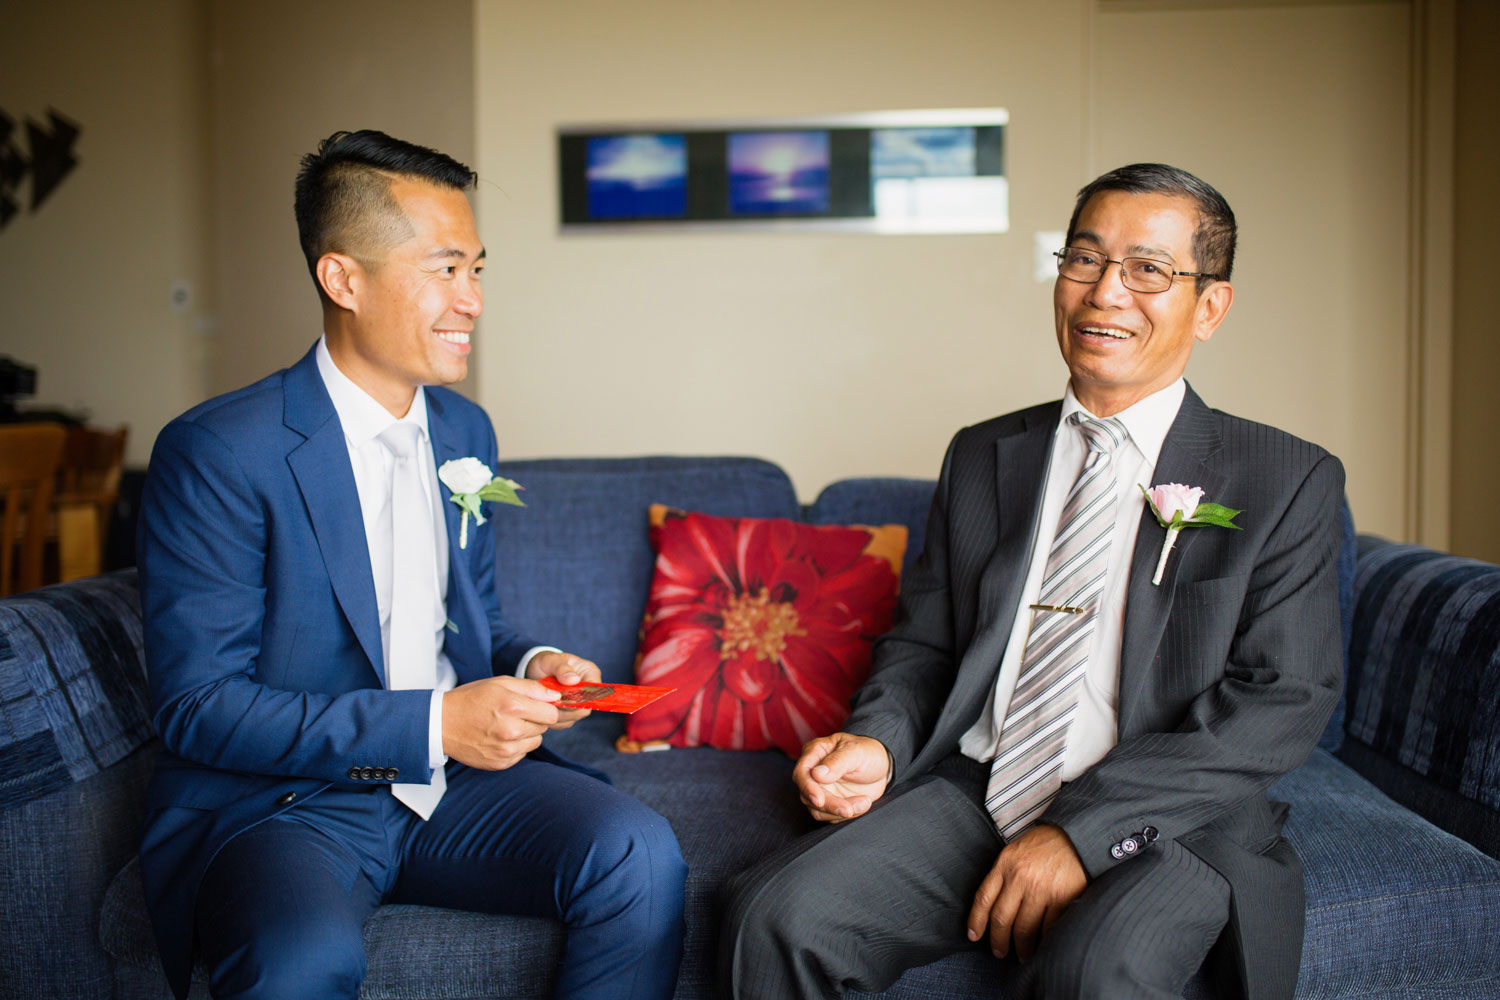 castaways waiuku wedding groom and his father